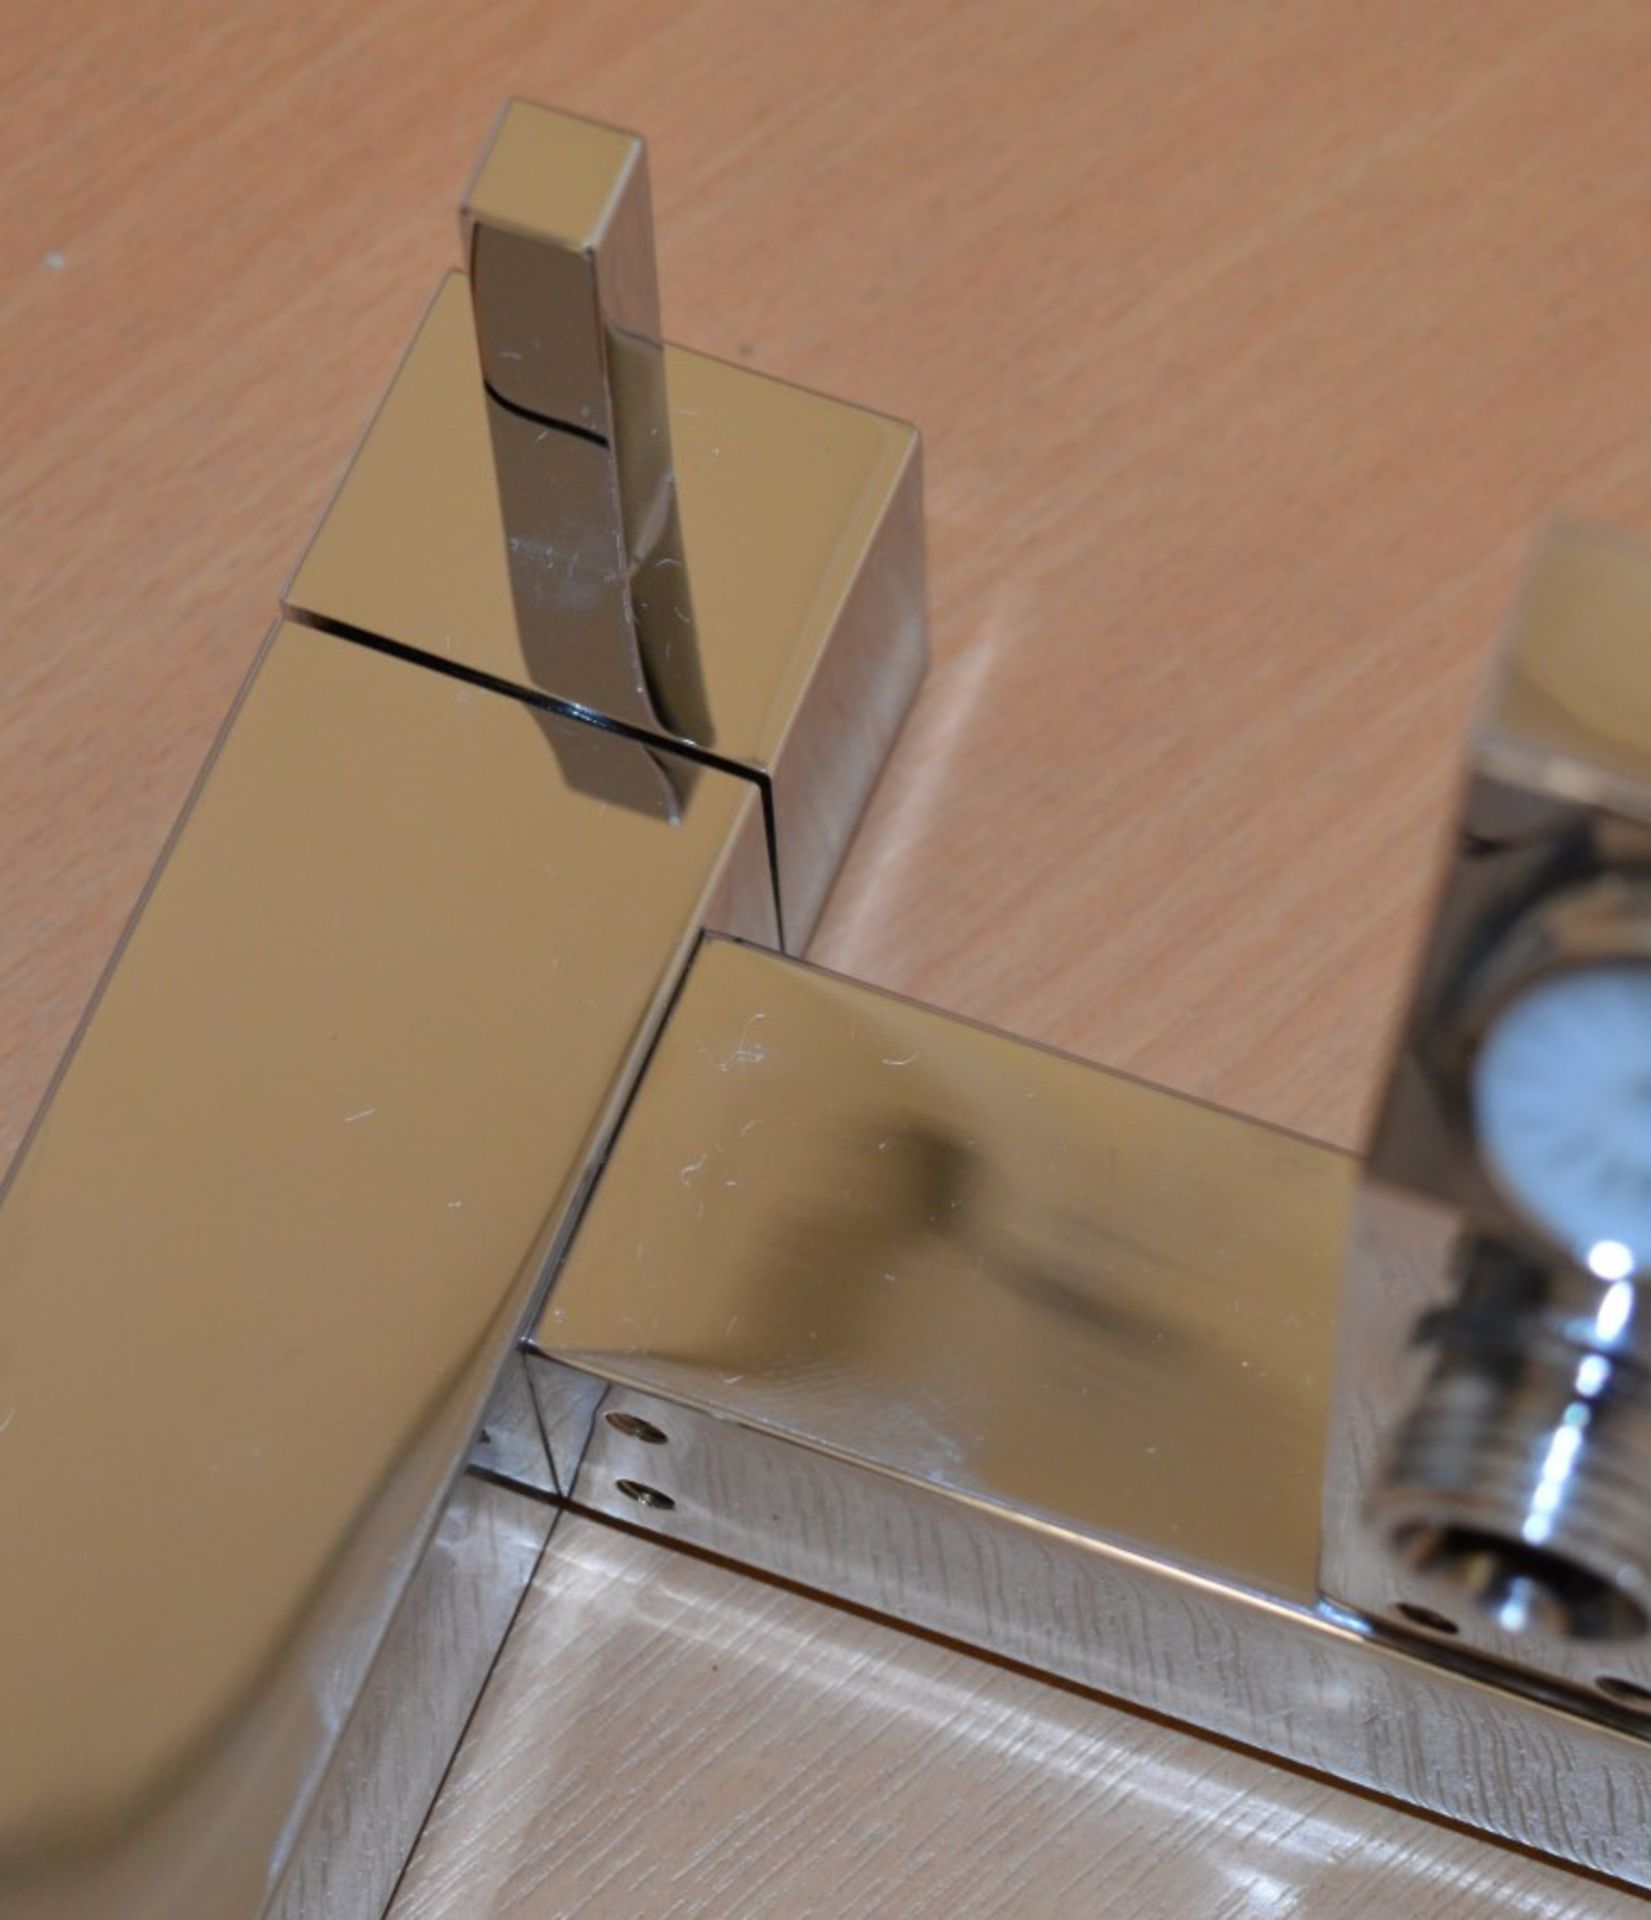 1 x Verona Deck Bath Shower Mixer Tap - Vogue Bathrooms - Modern Bath Mixer Tap in Bright Chrome - Image 13 of 15